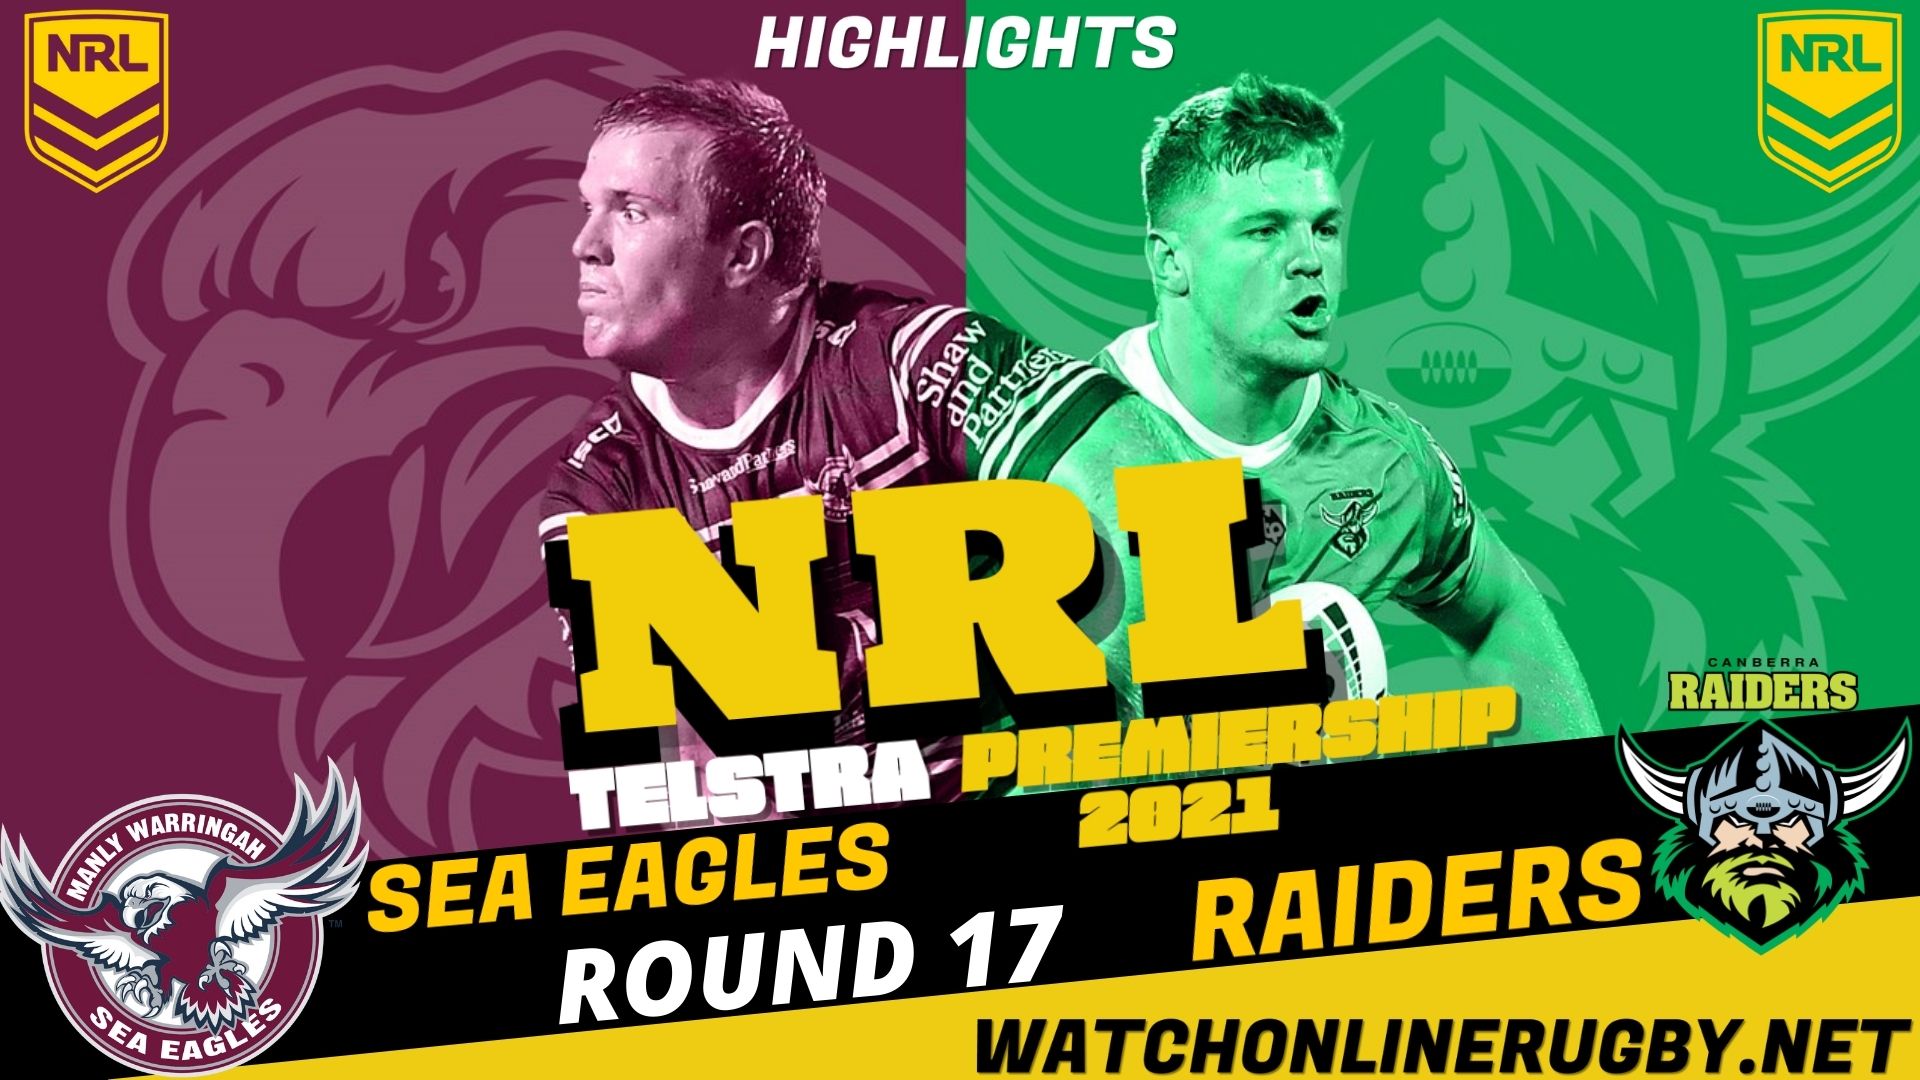 Sea Eagles Vs Raiders Highlights RD 17 NRL Rugby